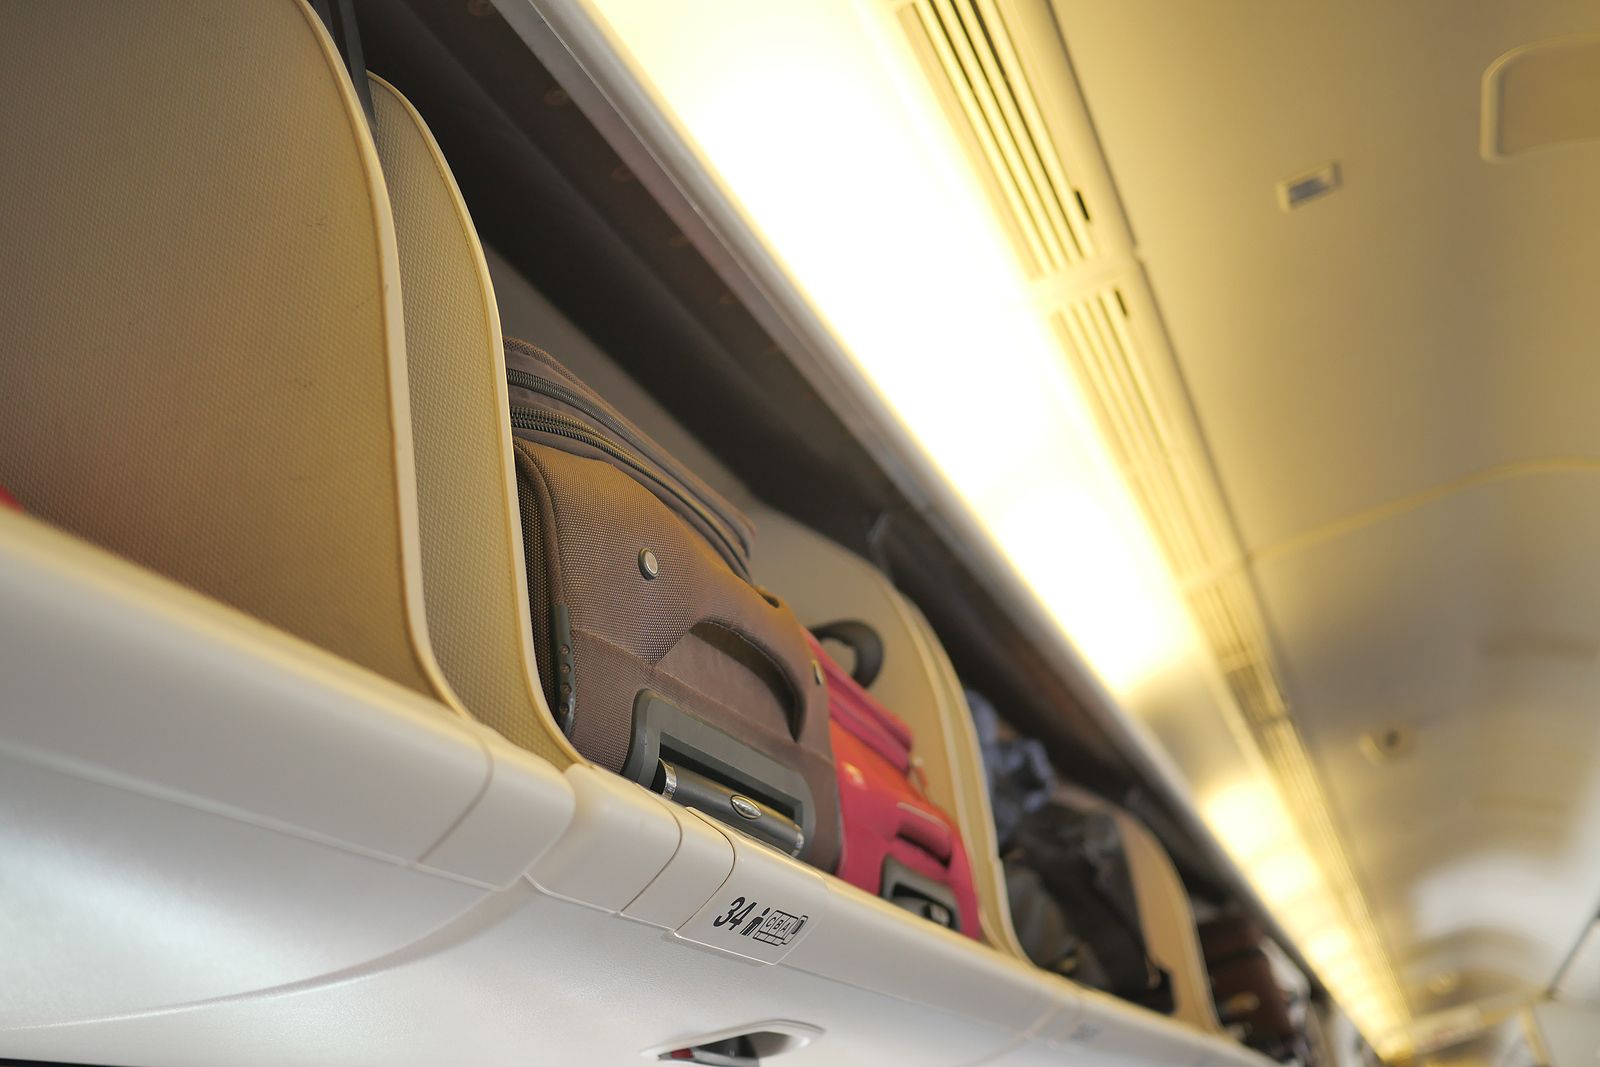 Seis compañías aéreas cobran suplemento por la maleta de cabina siendo ilegal